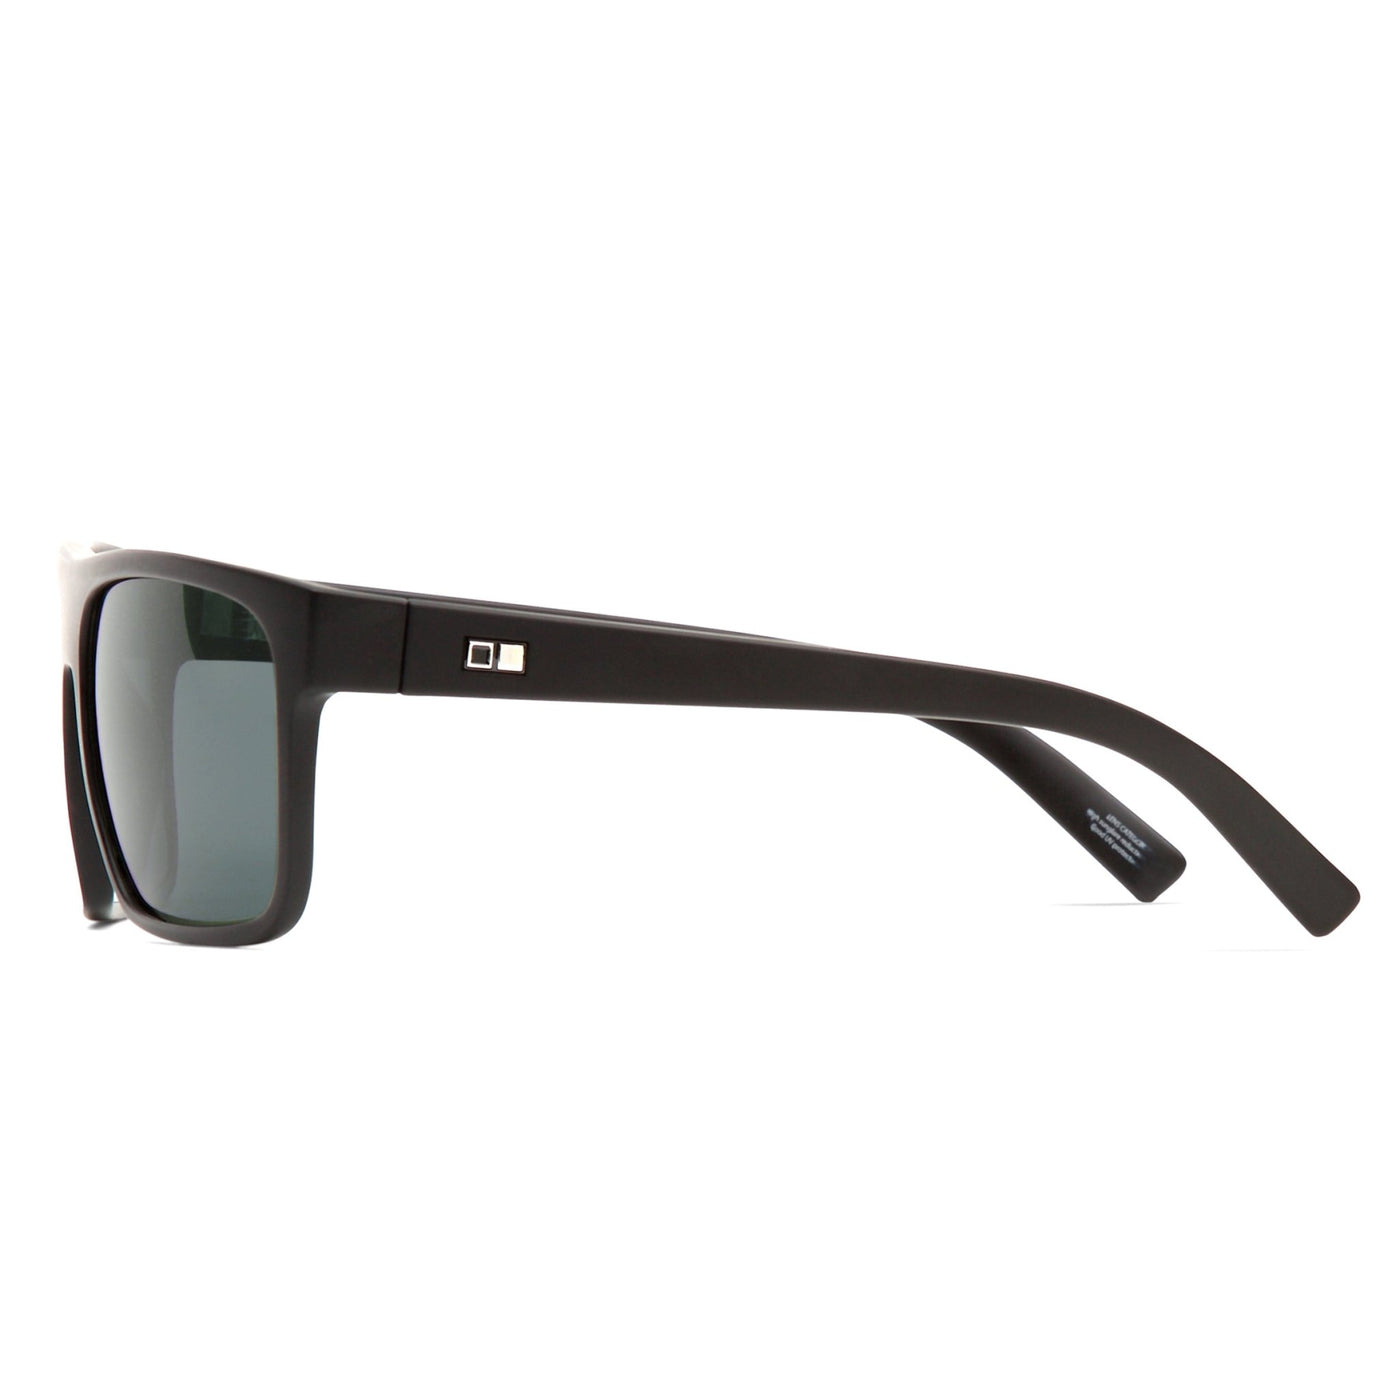 Black OTIS Eyewear sunglasses facing the side